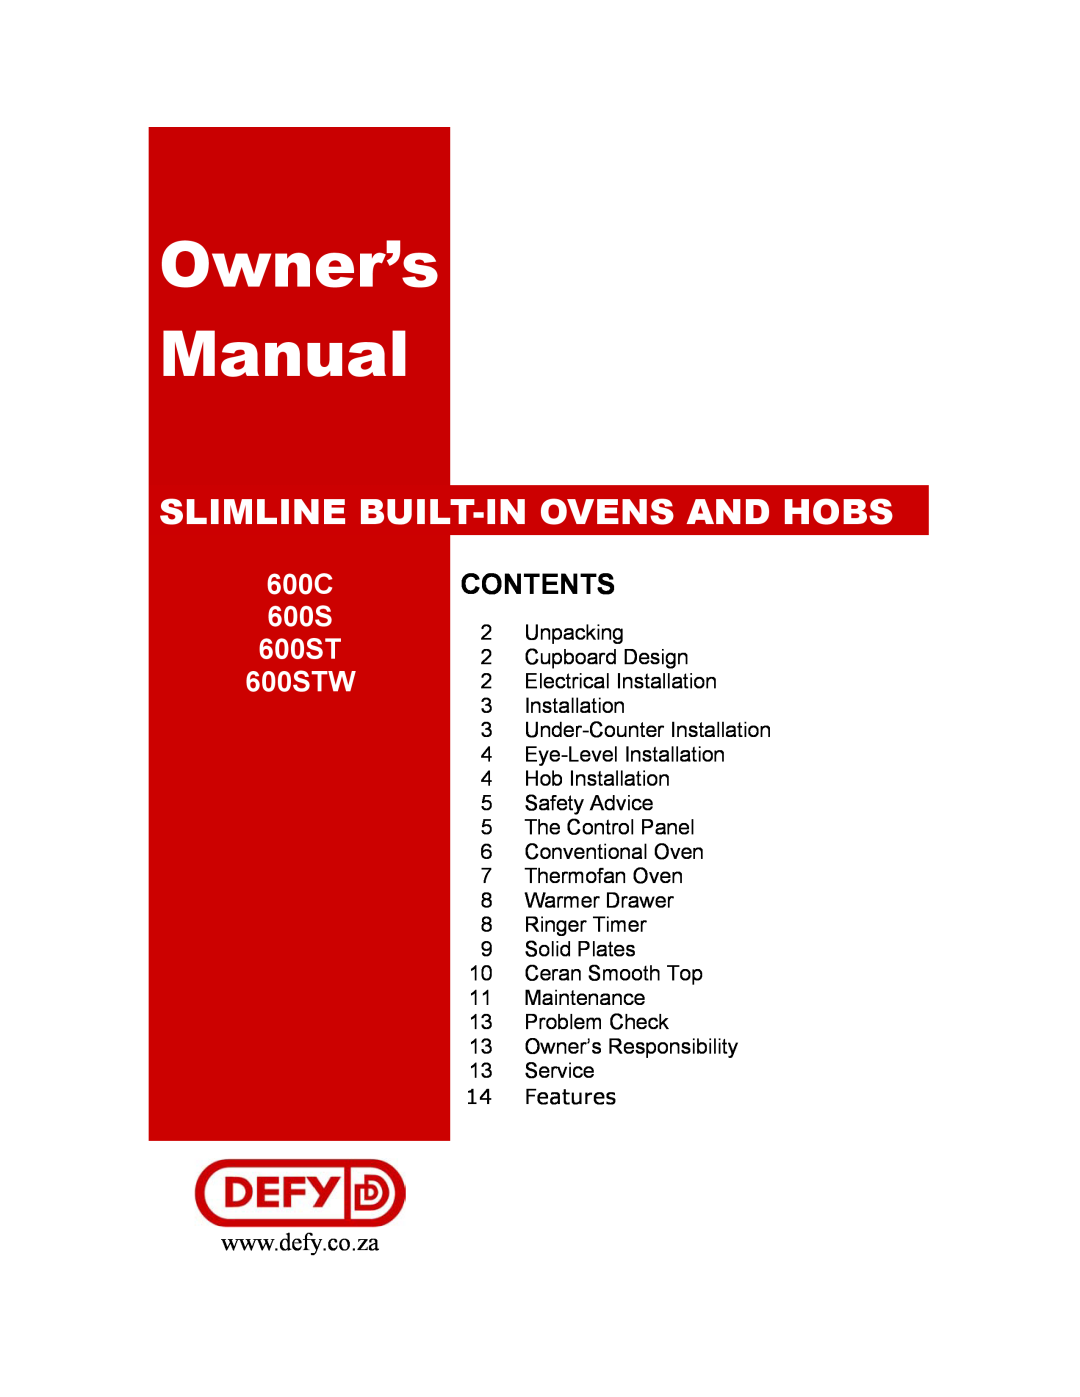 Defy Appliances 600C owner manual Slimline Built-Inovens And Hobs, Contents, 600STW 